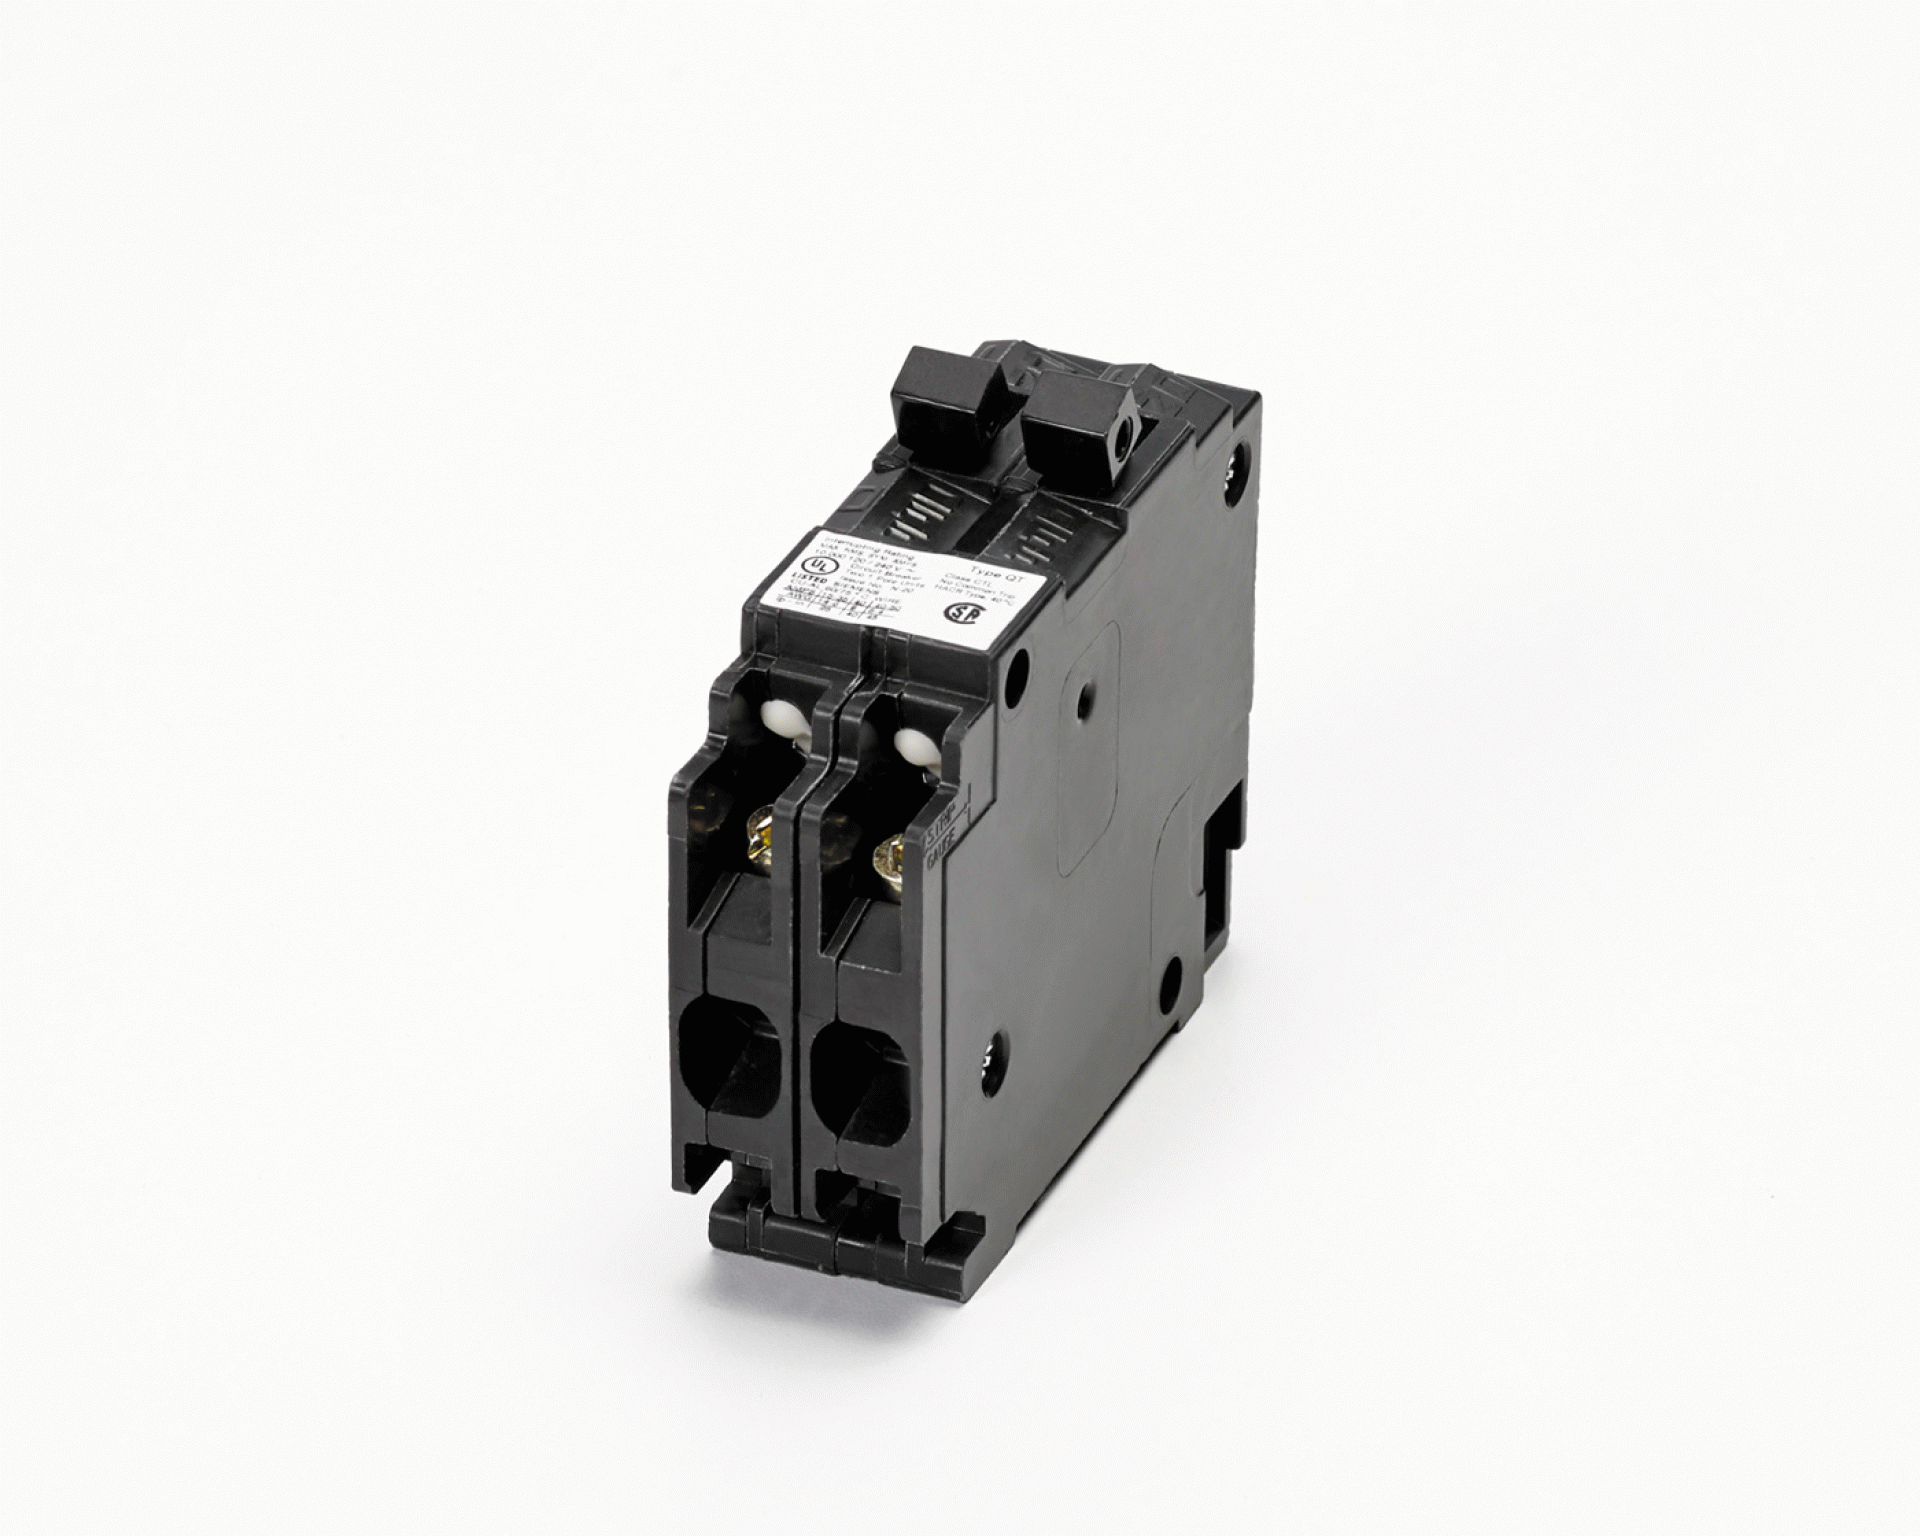 PARALLAX POWER SUPPLY | ITEQ1515 | Siemens Duplex Circuit Breaker twin pole 15 AMP